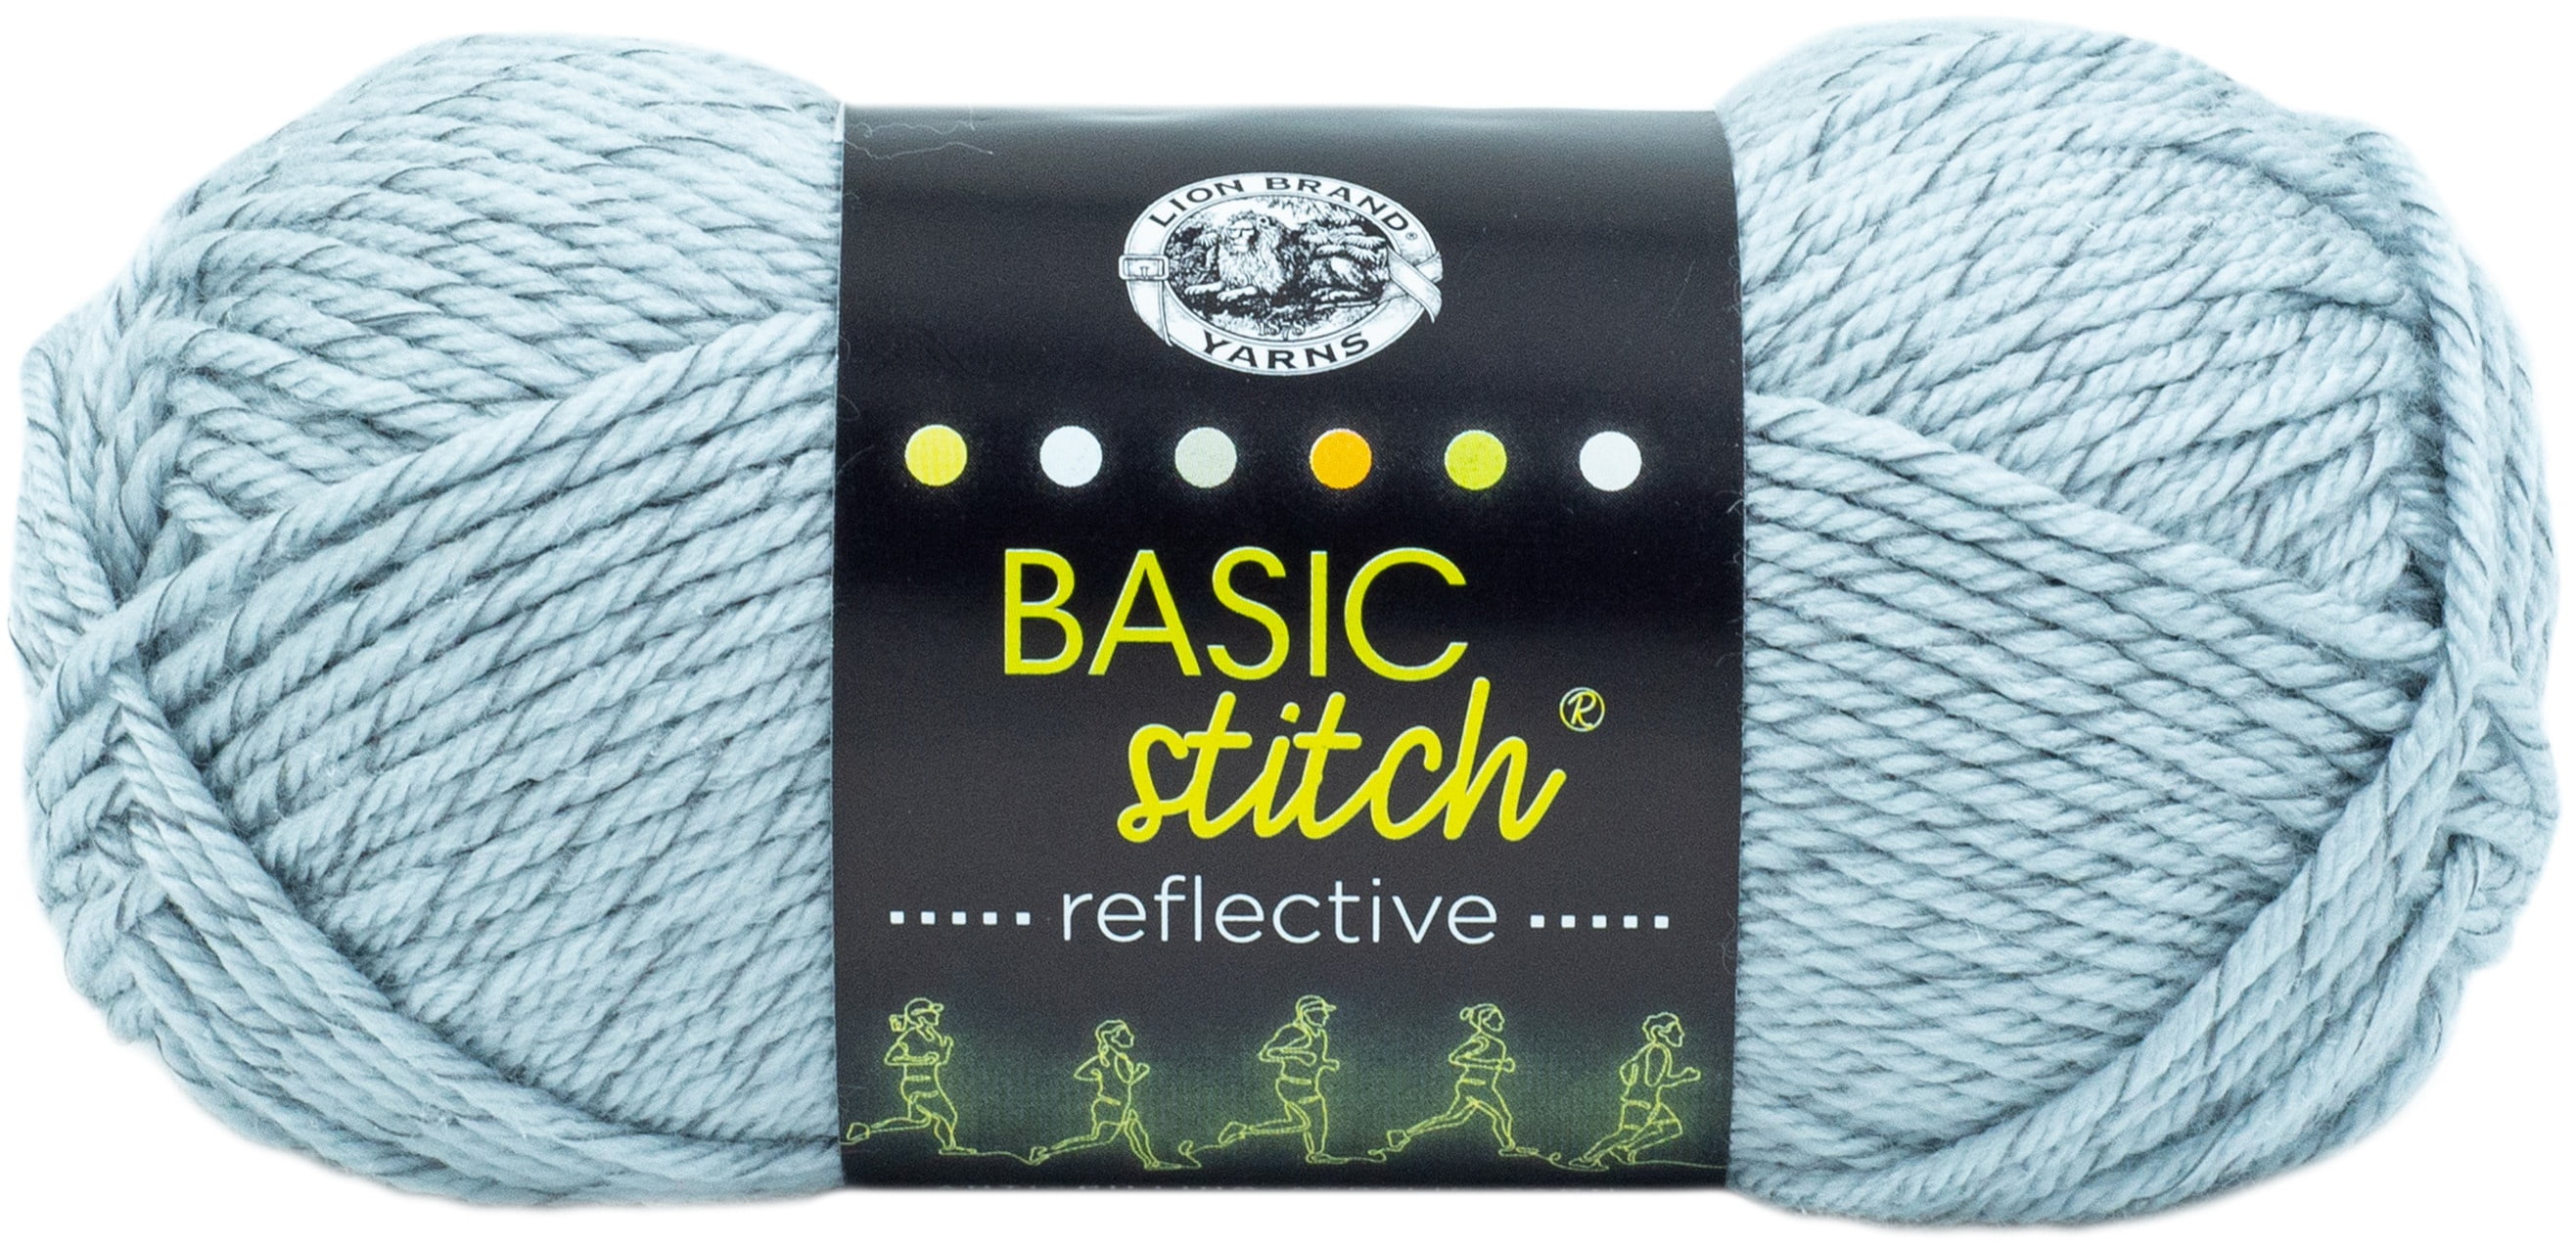 Lion Brand Yarn Basic Stitch Anti Pilling Almond Tweed Medium Acrylic  Multi-color Yarn 3 Pack